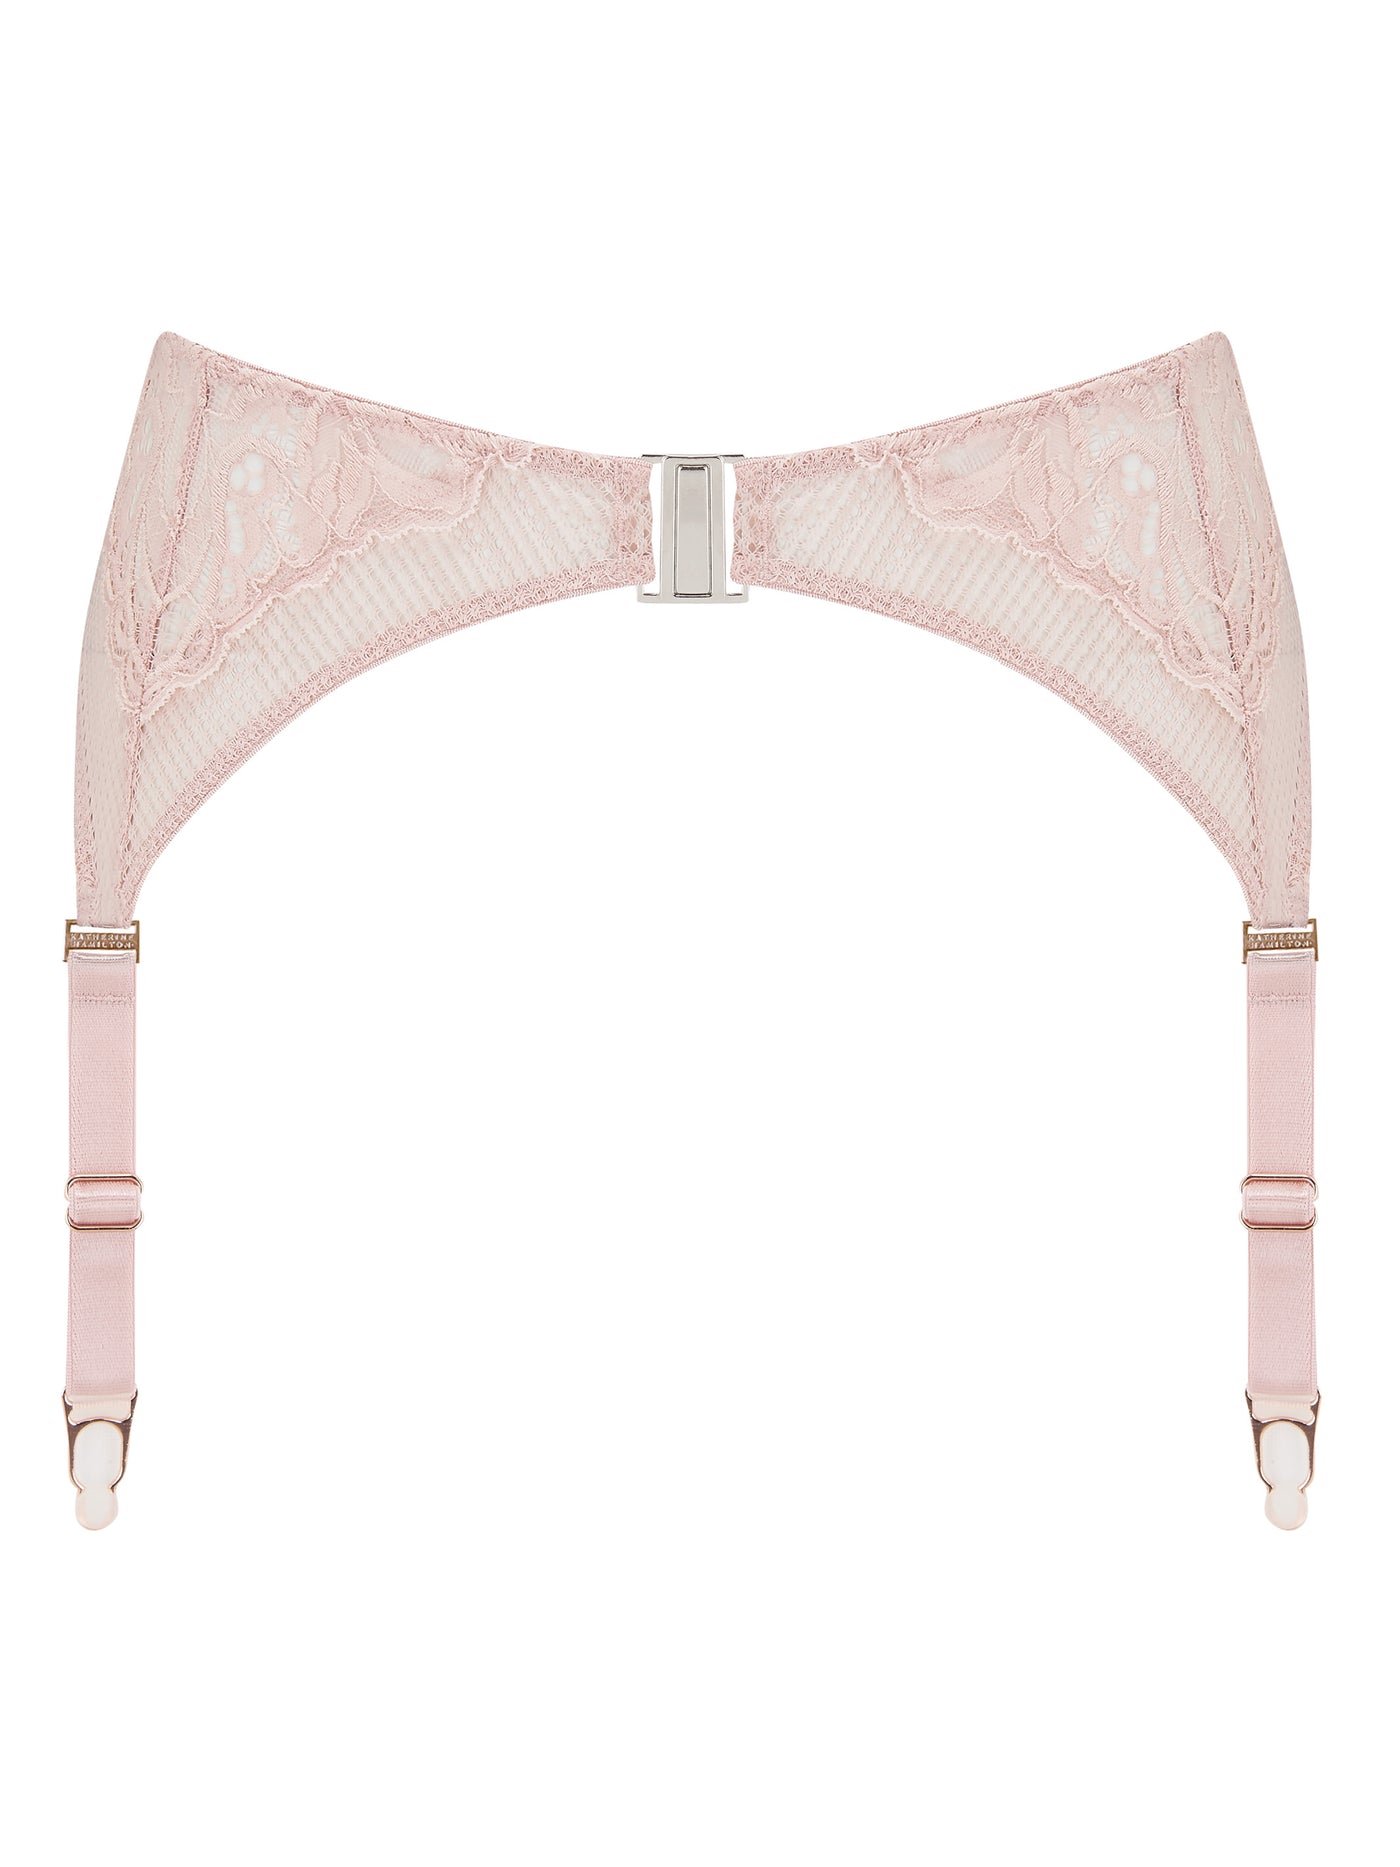 Simone rose pink stretch lace suspender belt